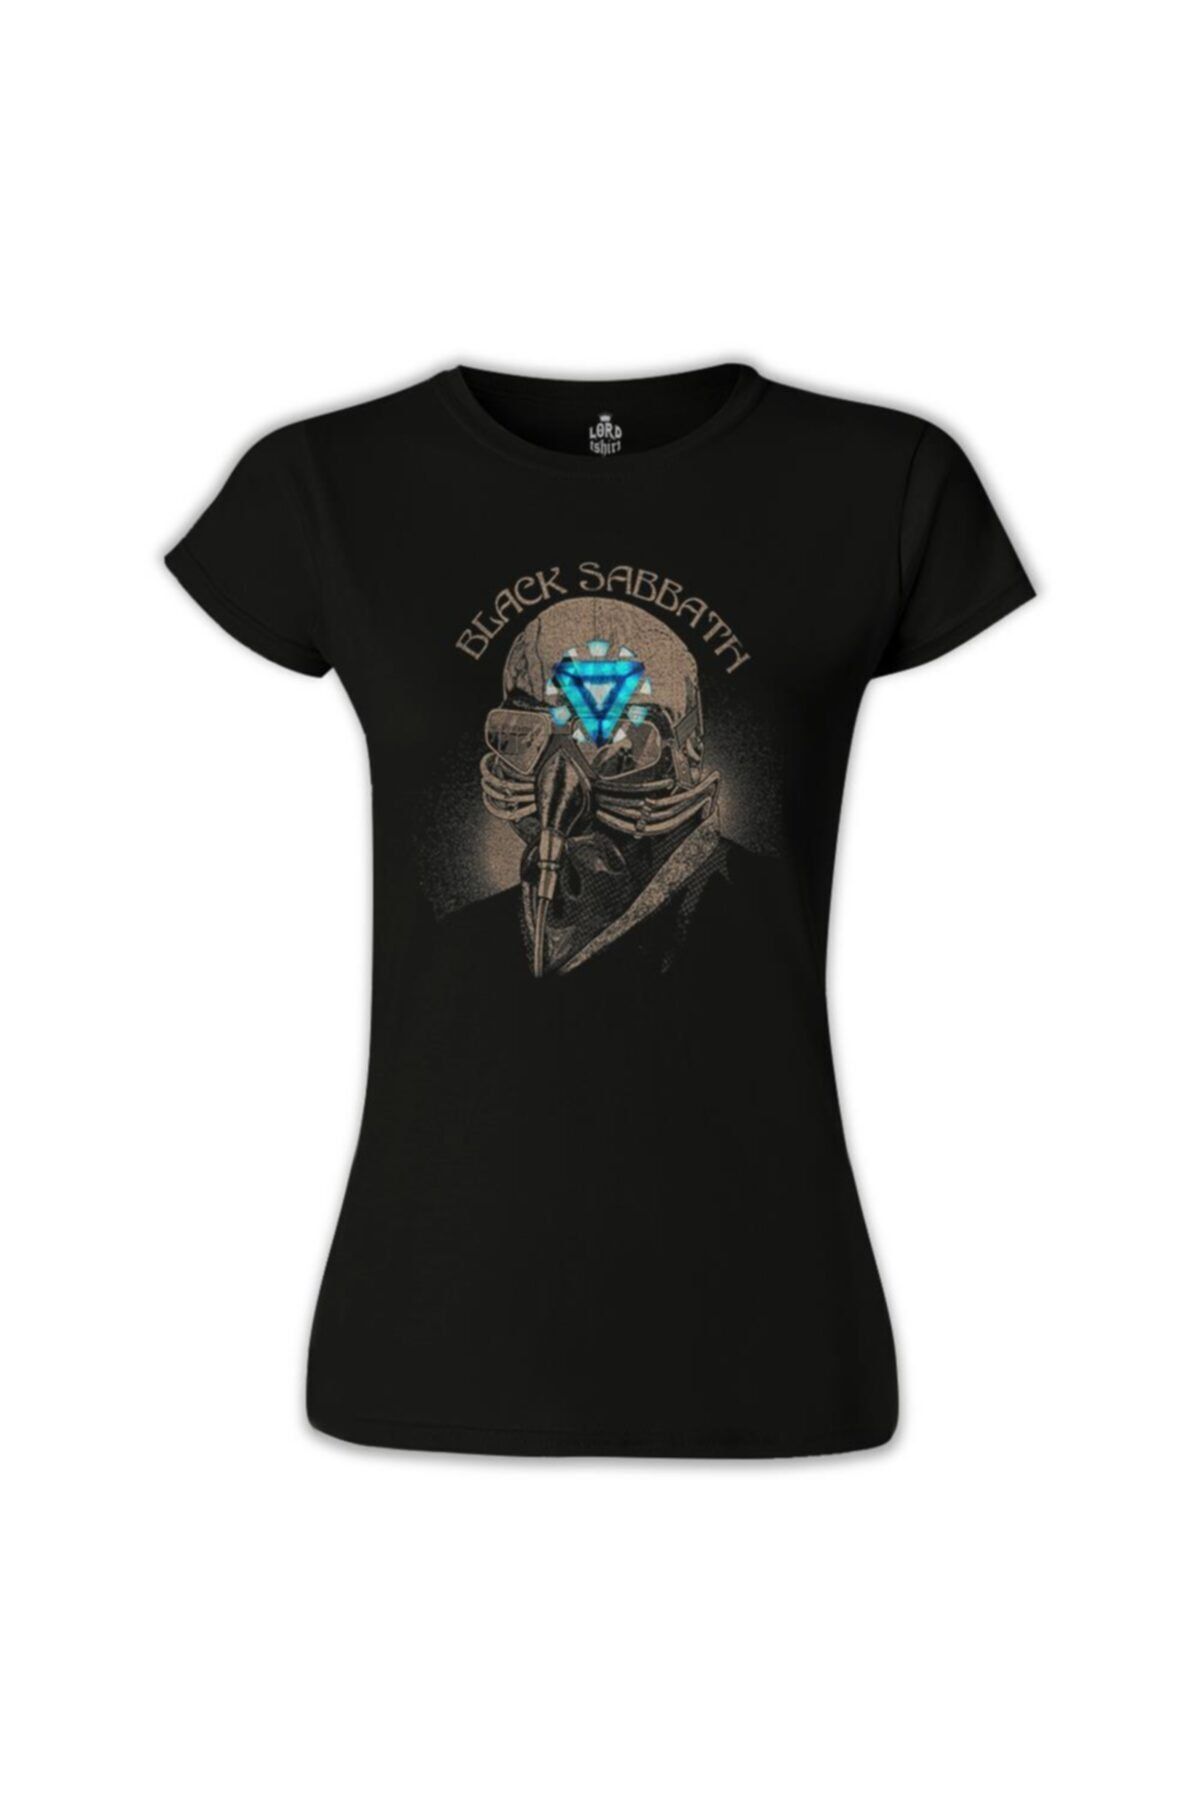 Lord T-Shirt Kadın Siyah Black Sabbath Arc Reactor Tshirt - BS-636